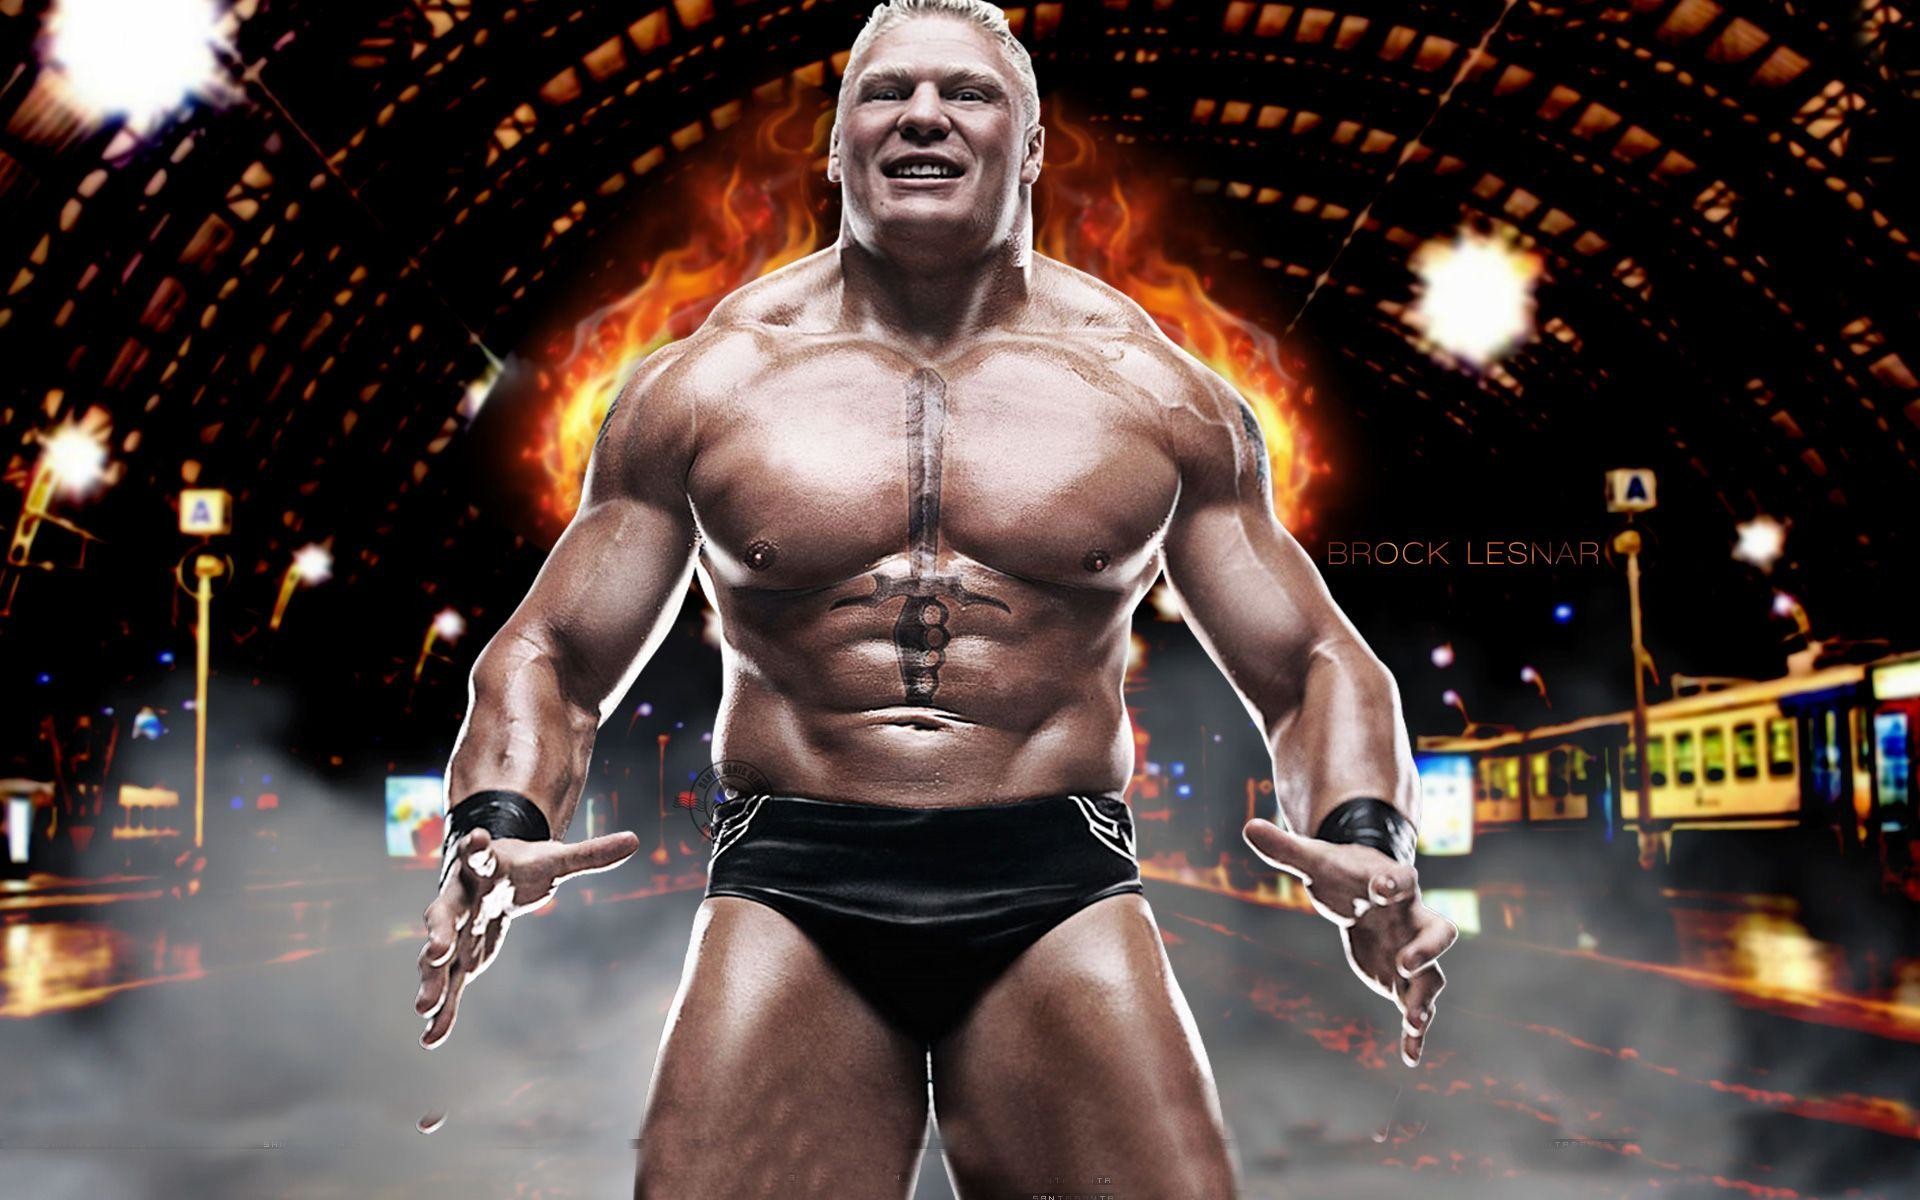 Brock Lesnar WWE Wallpaper 2018 (64+ pictures)